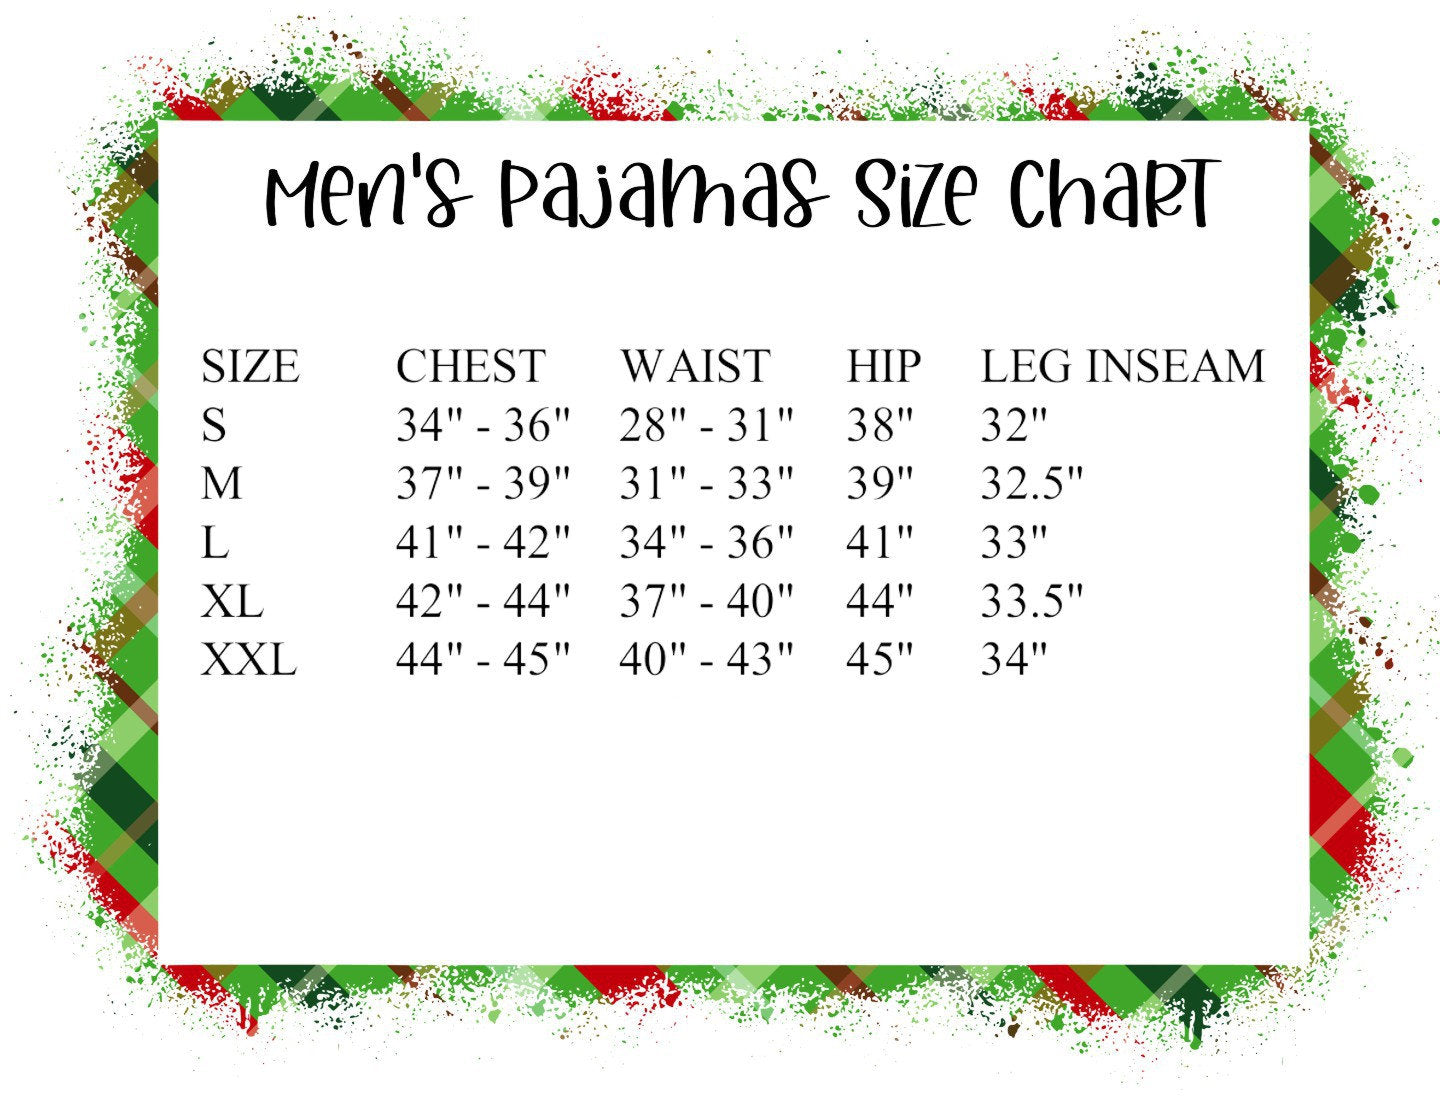 Christmas on the Farm Solid Grey Pajamas - adult and kids sizes - kids christmas pjs - women's christmas jammies - Family matching PJs